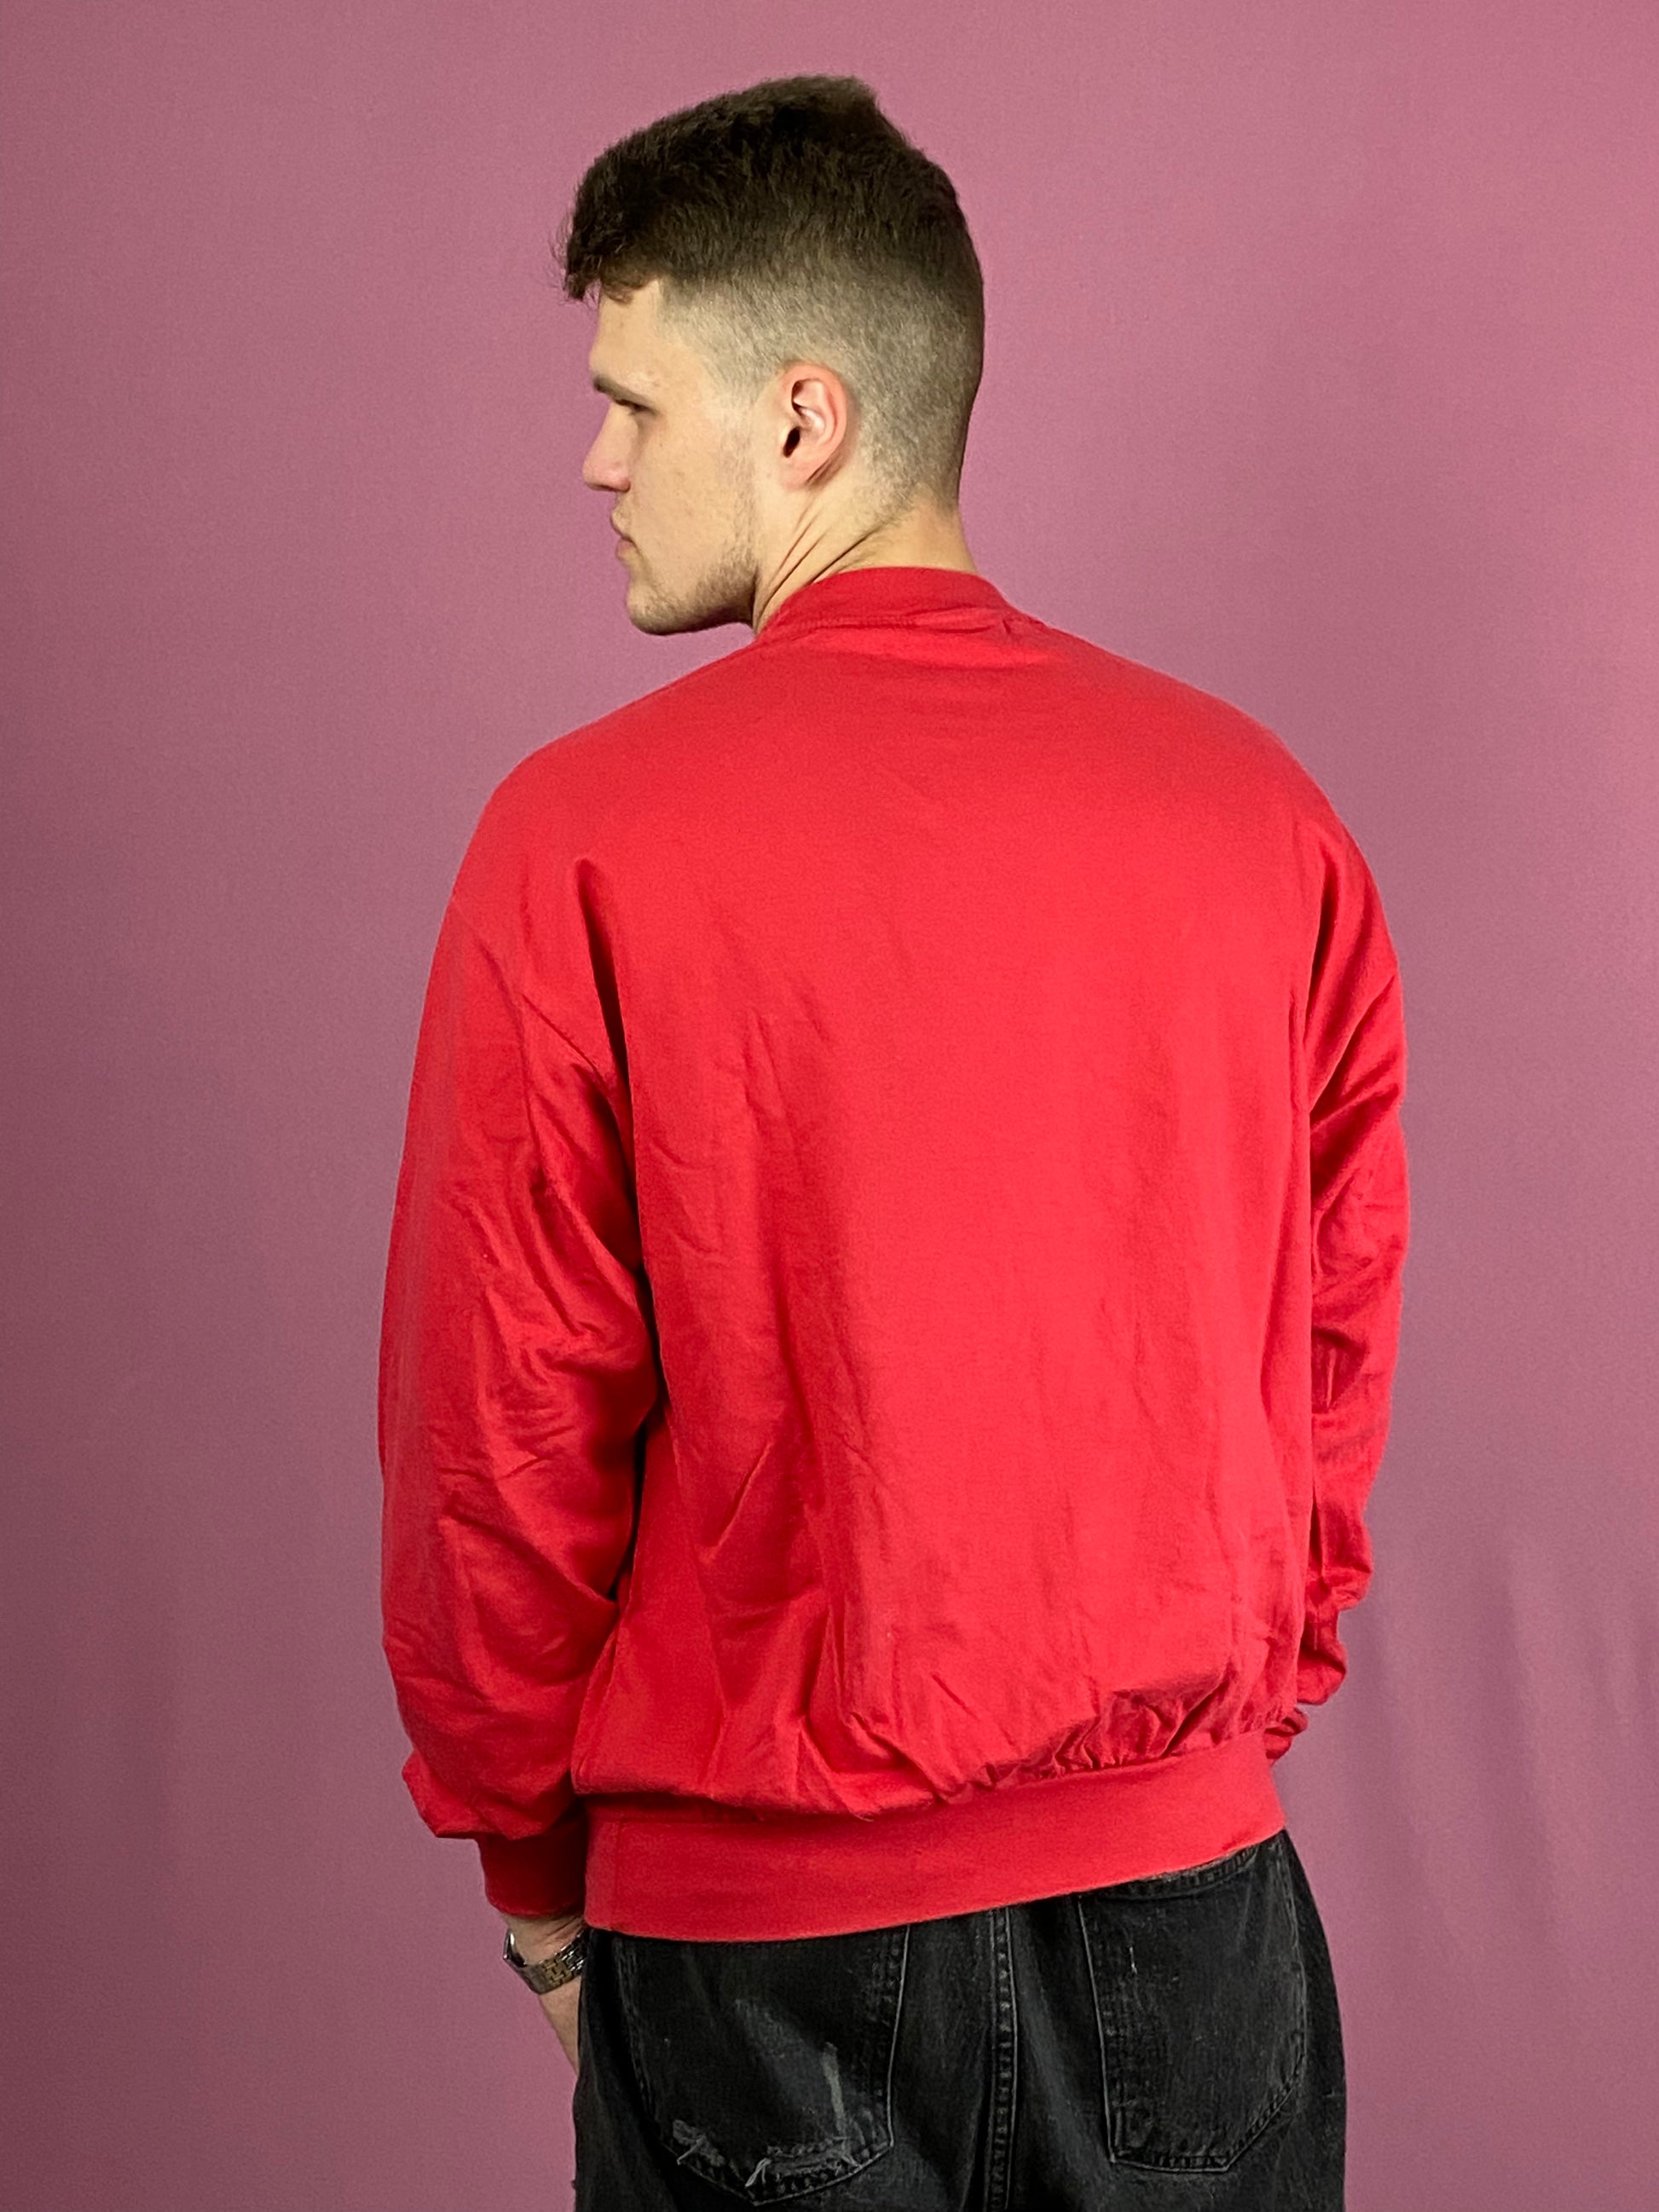 90s Reebok Vintage Men's Sweatshirt - Large Red Cotton Blend